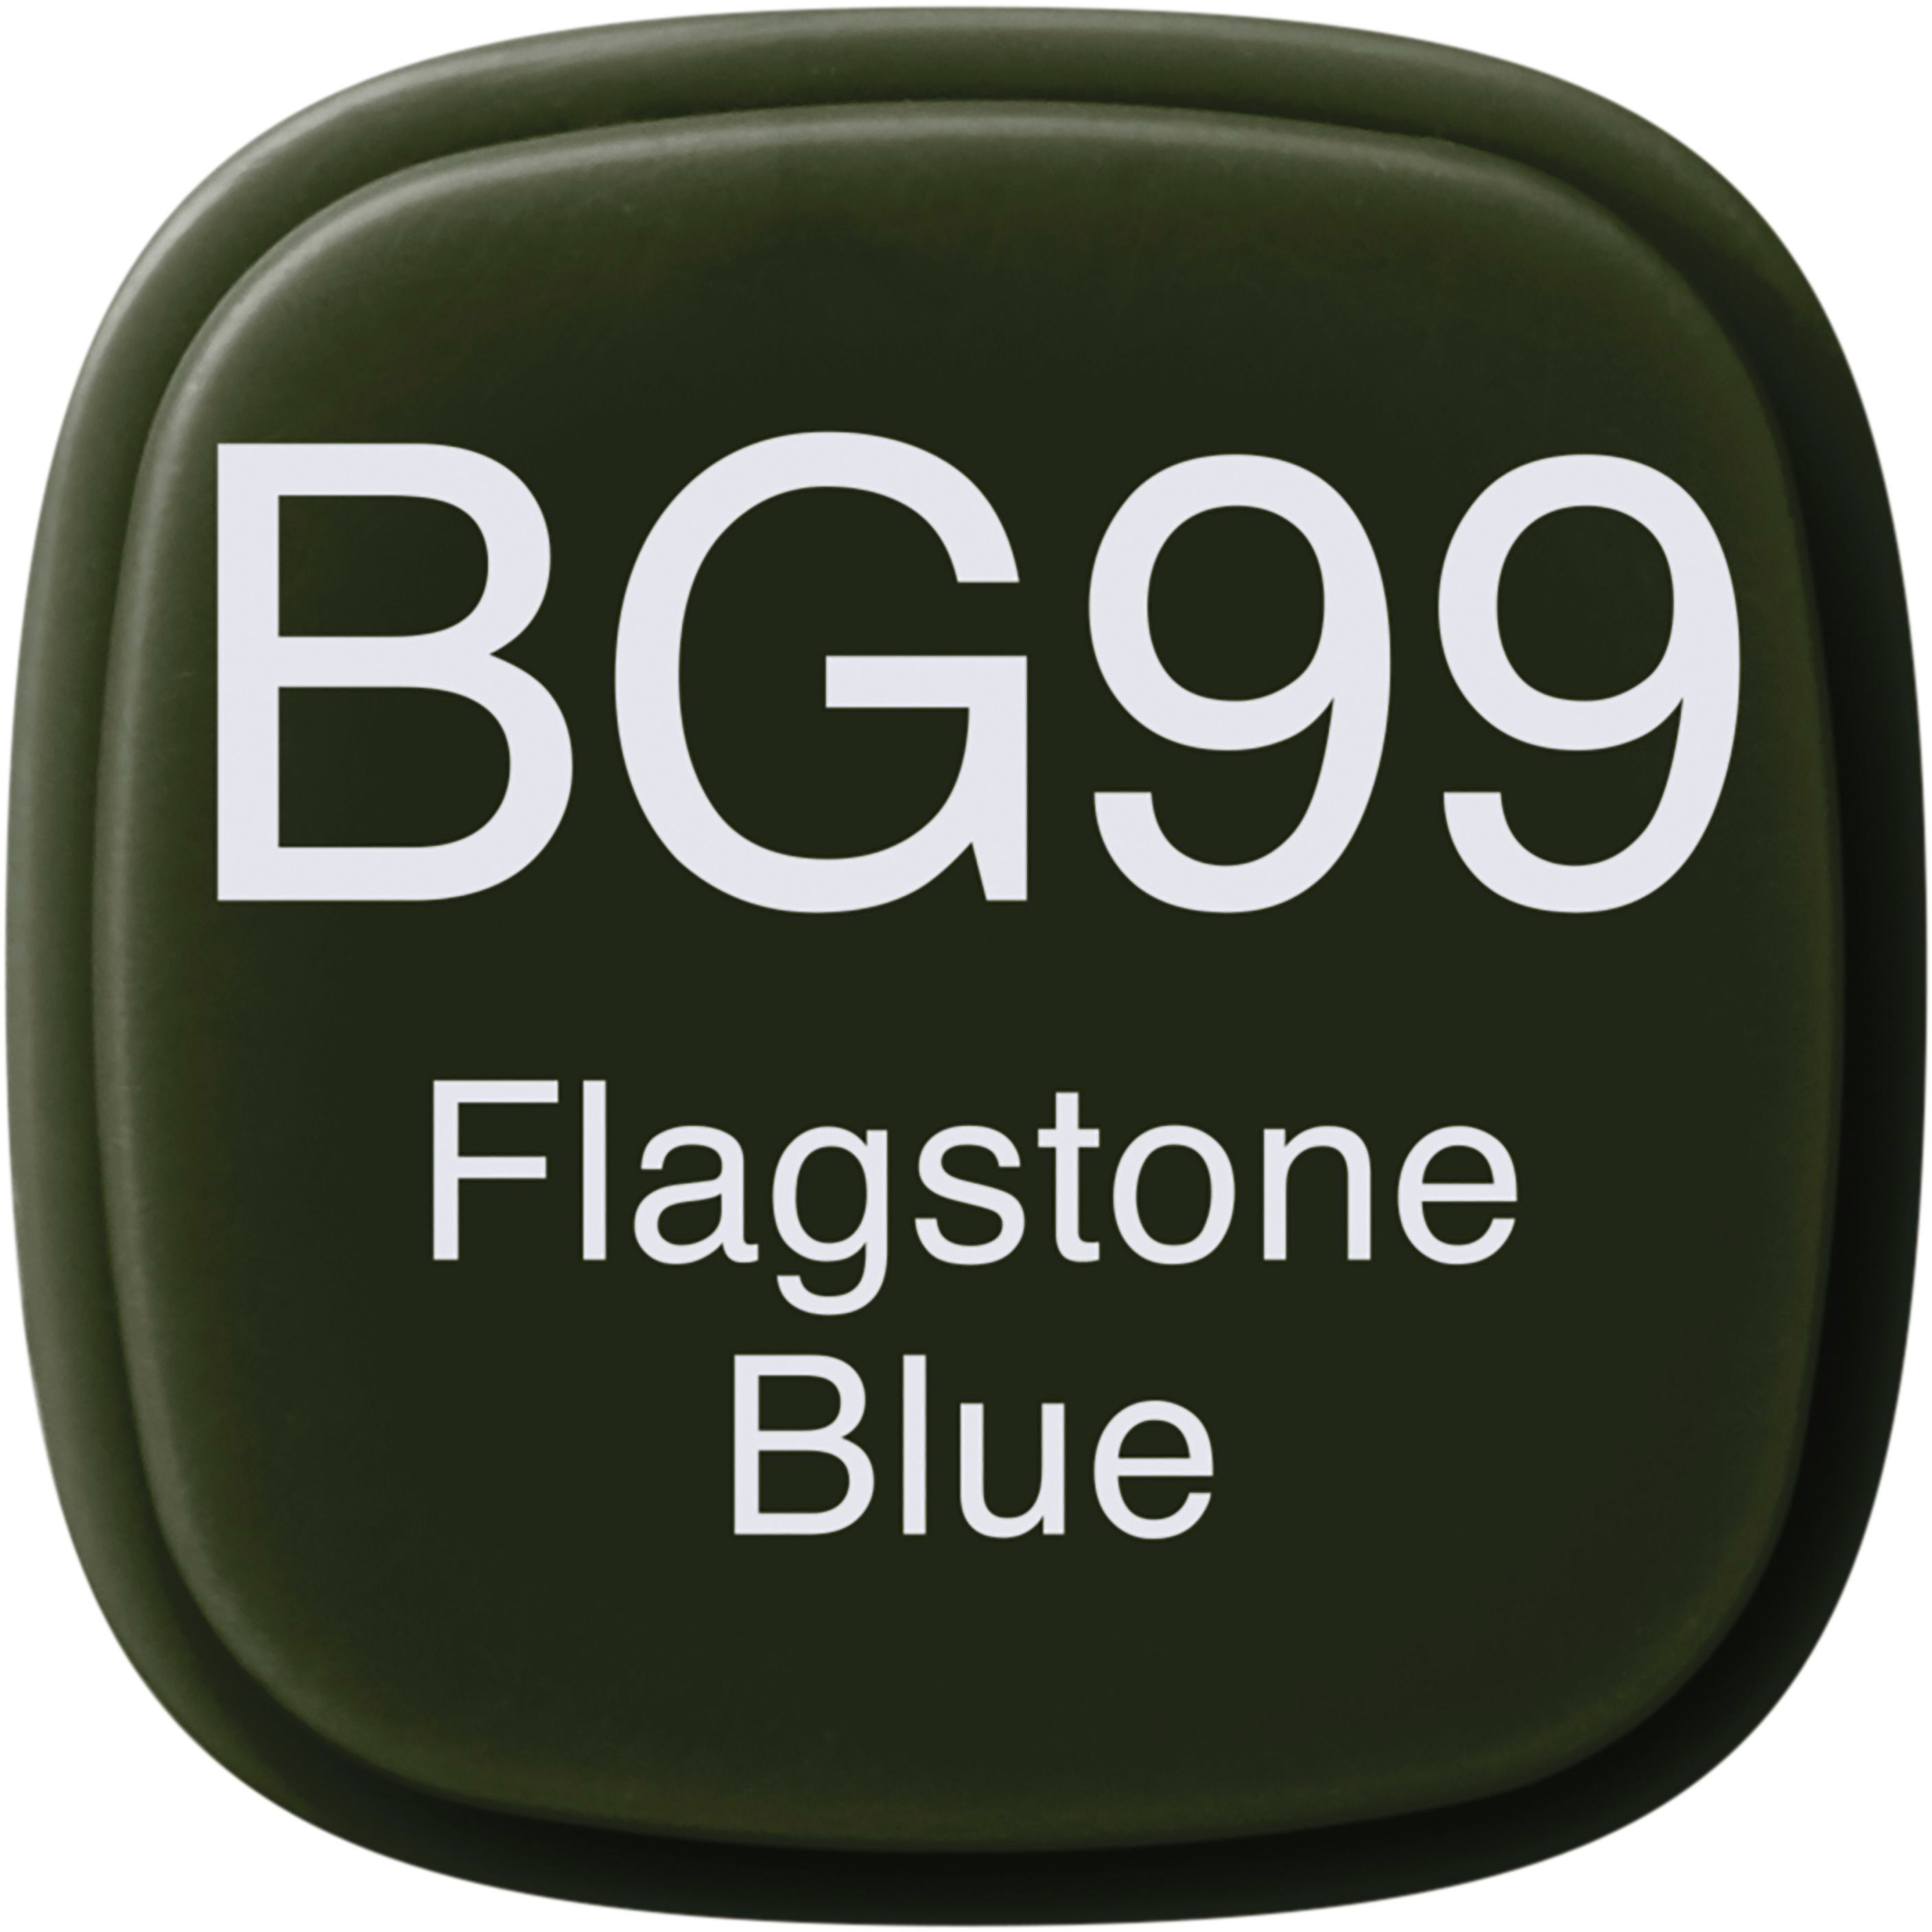 COPIC Marker Classic 20075130 BG99 - Flagstone Blue